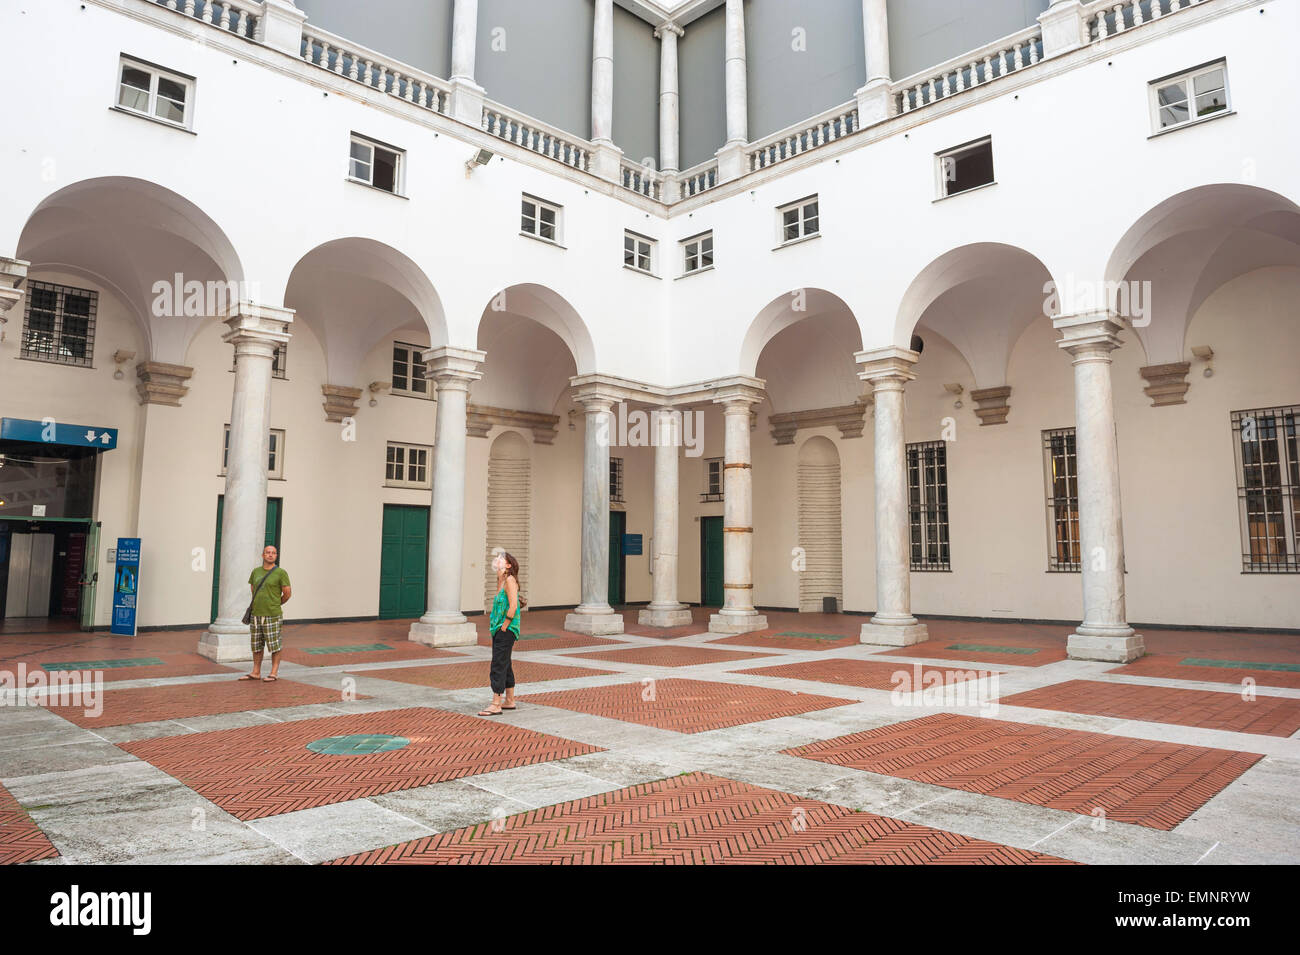 Genua Museum, Touristen im Palazzo Ducale in Genua Pause, um die Architektur des Hofes zu studieren, Genua, Ligurien, Italien. Stockfoto